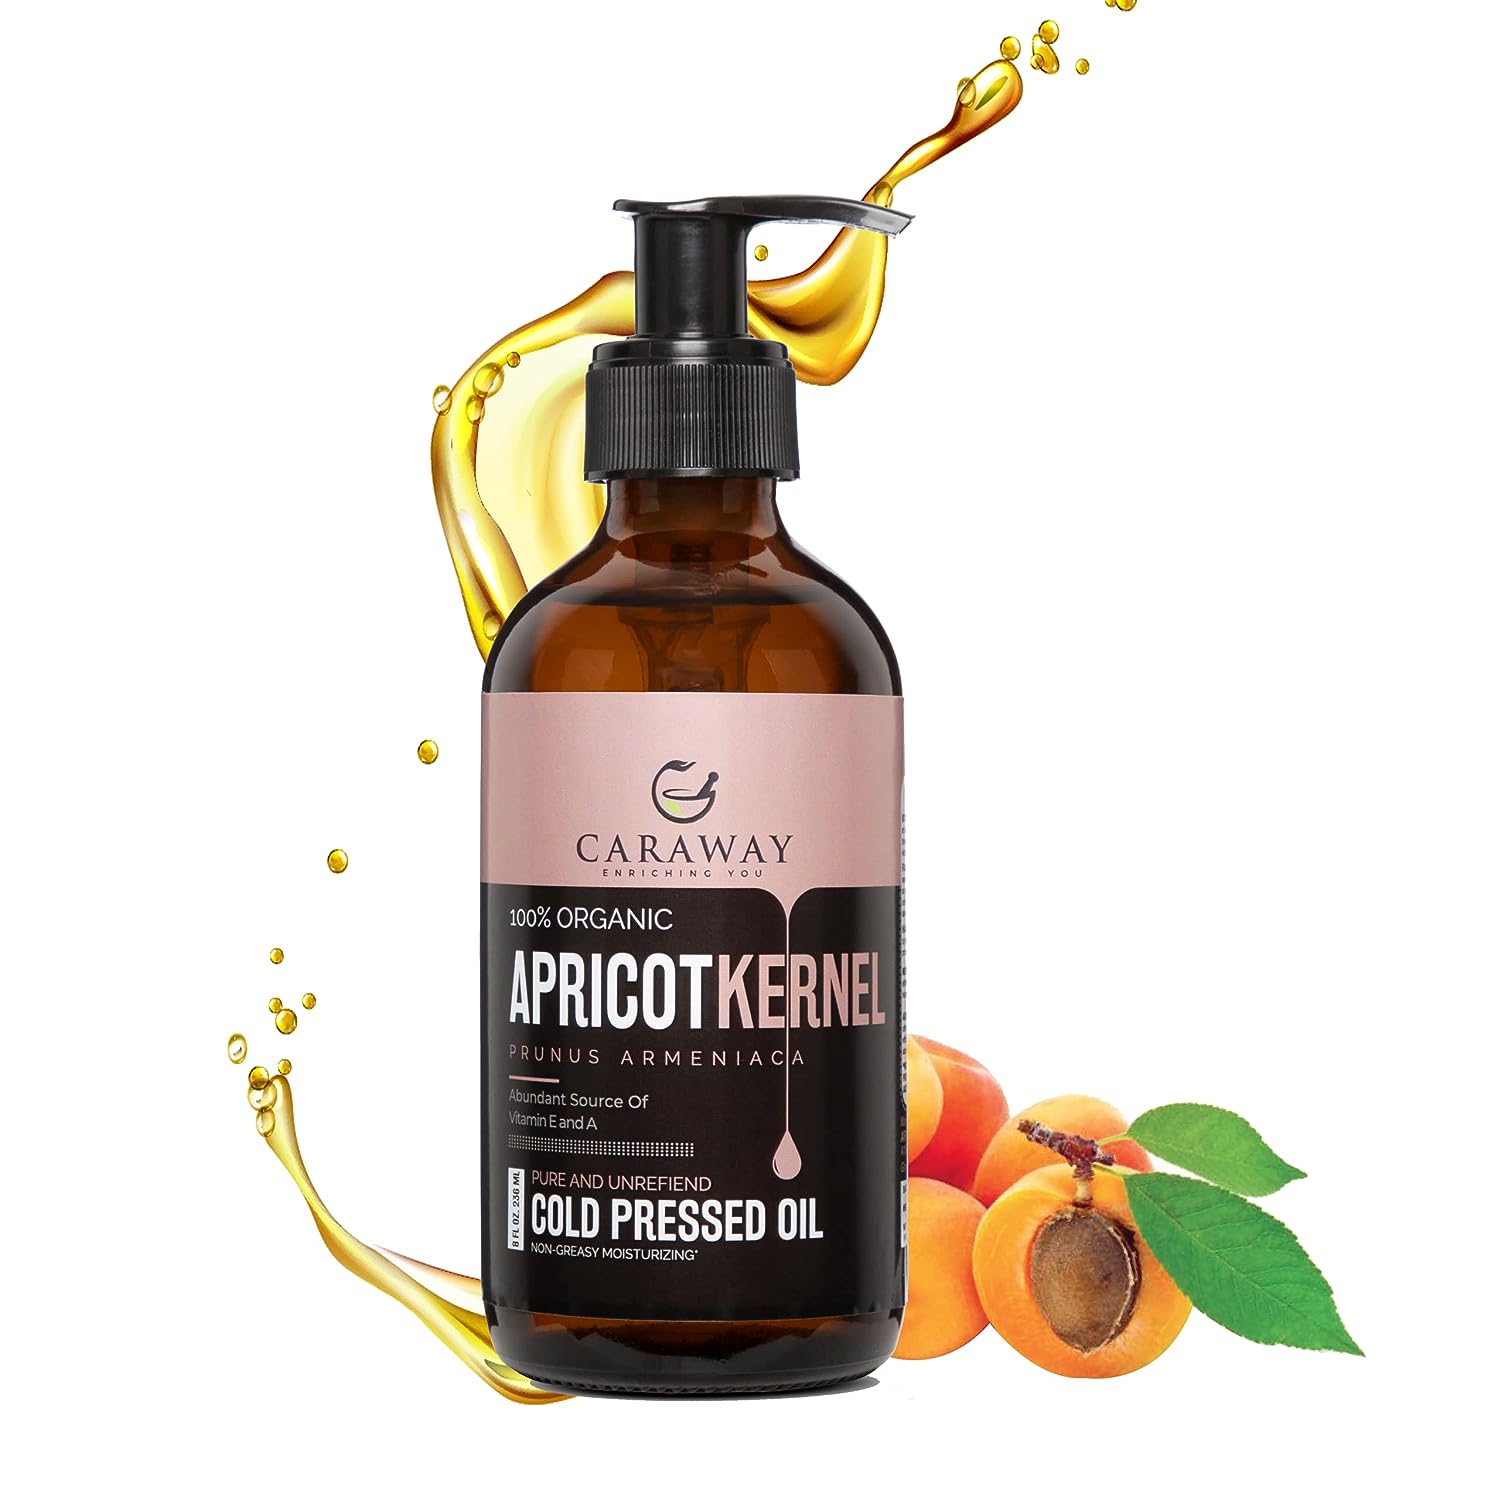 Apricot Kernel Oil | 8 fl oz | Moisturizing Oil for Face, Hair, Skin, &  Nails | Free of Parabens, SLS, & Fragrances | Coera By Horbaach